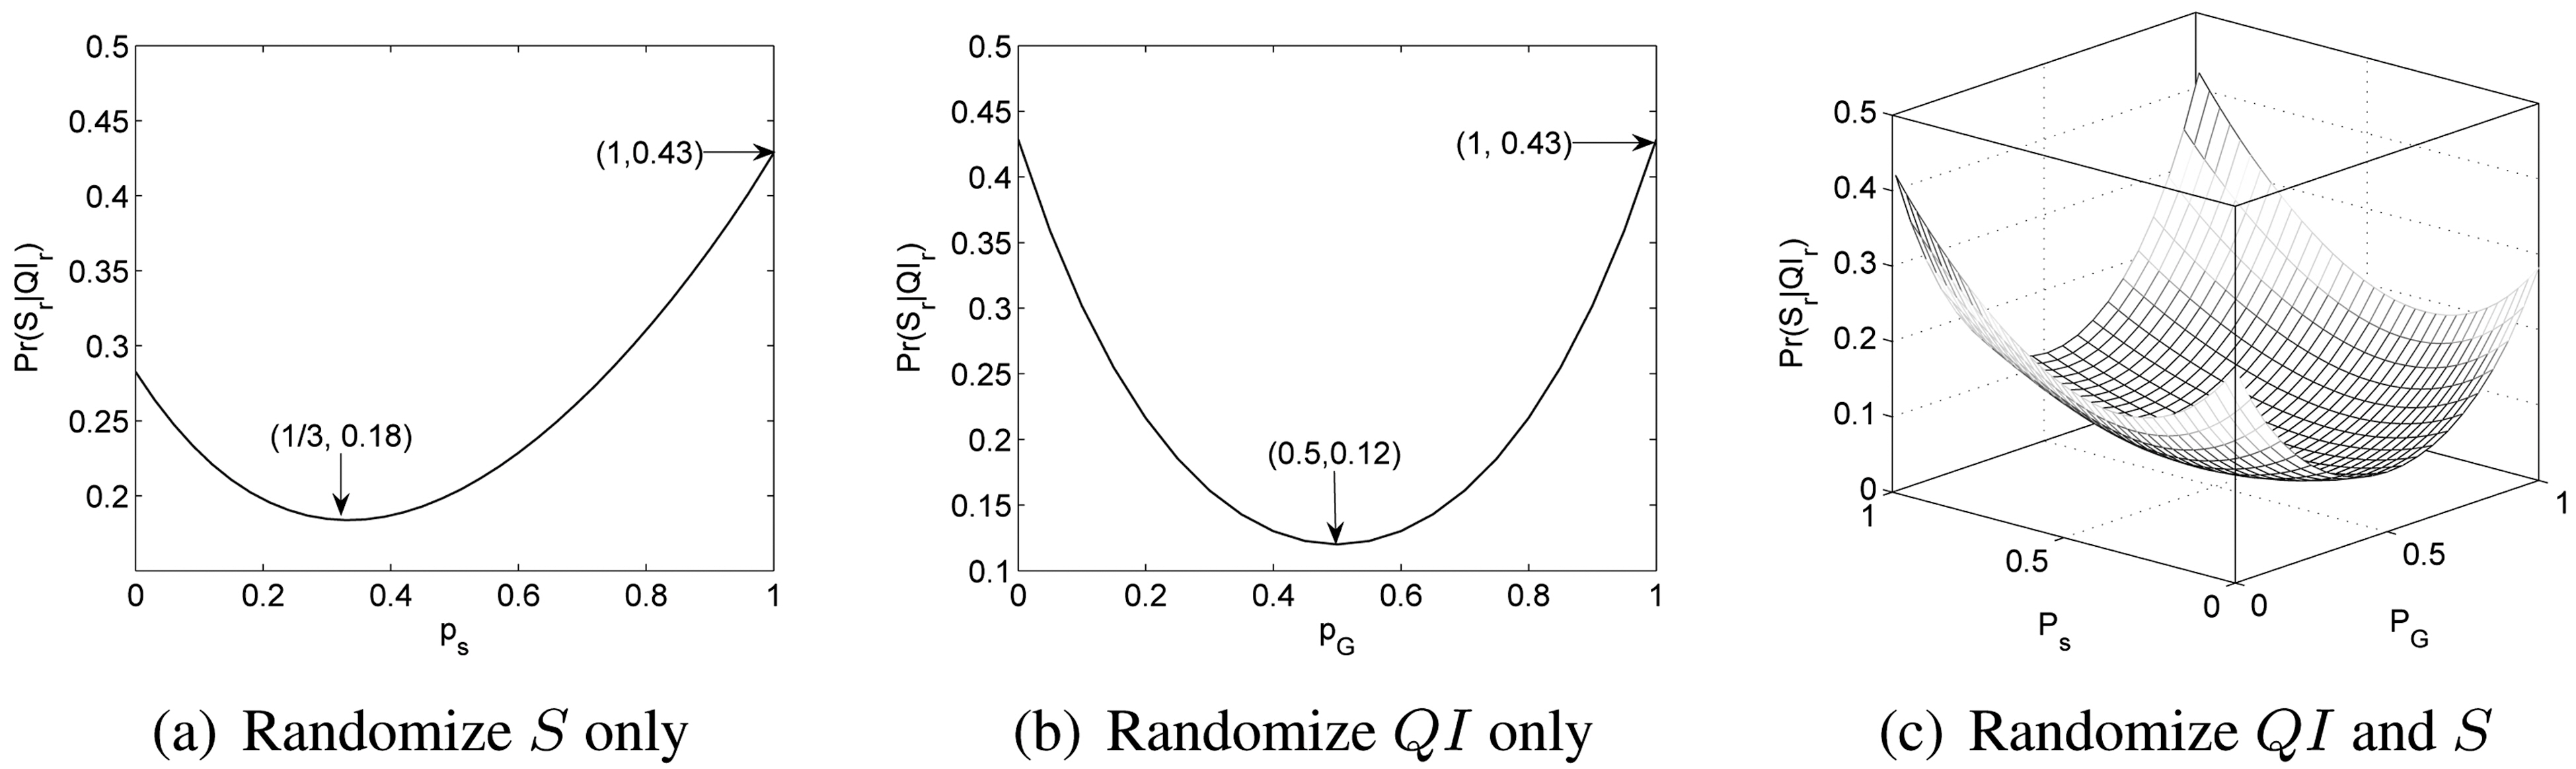 Pr(Sr'QIr) vs. randomization parameters. QI: quasiidentifier.